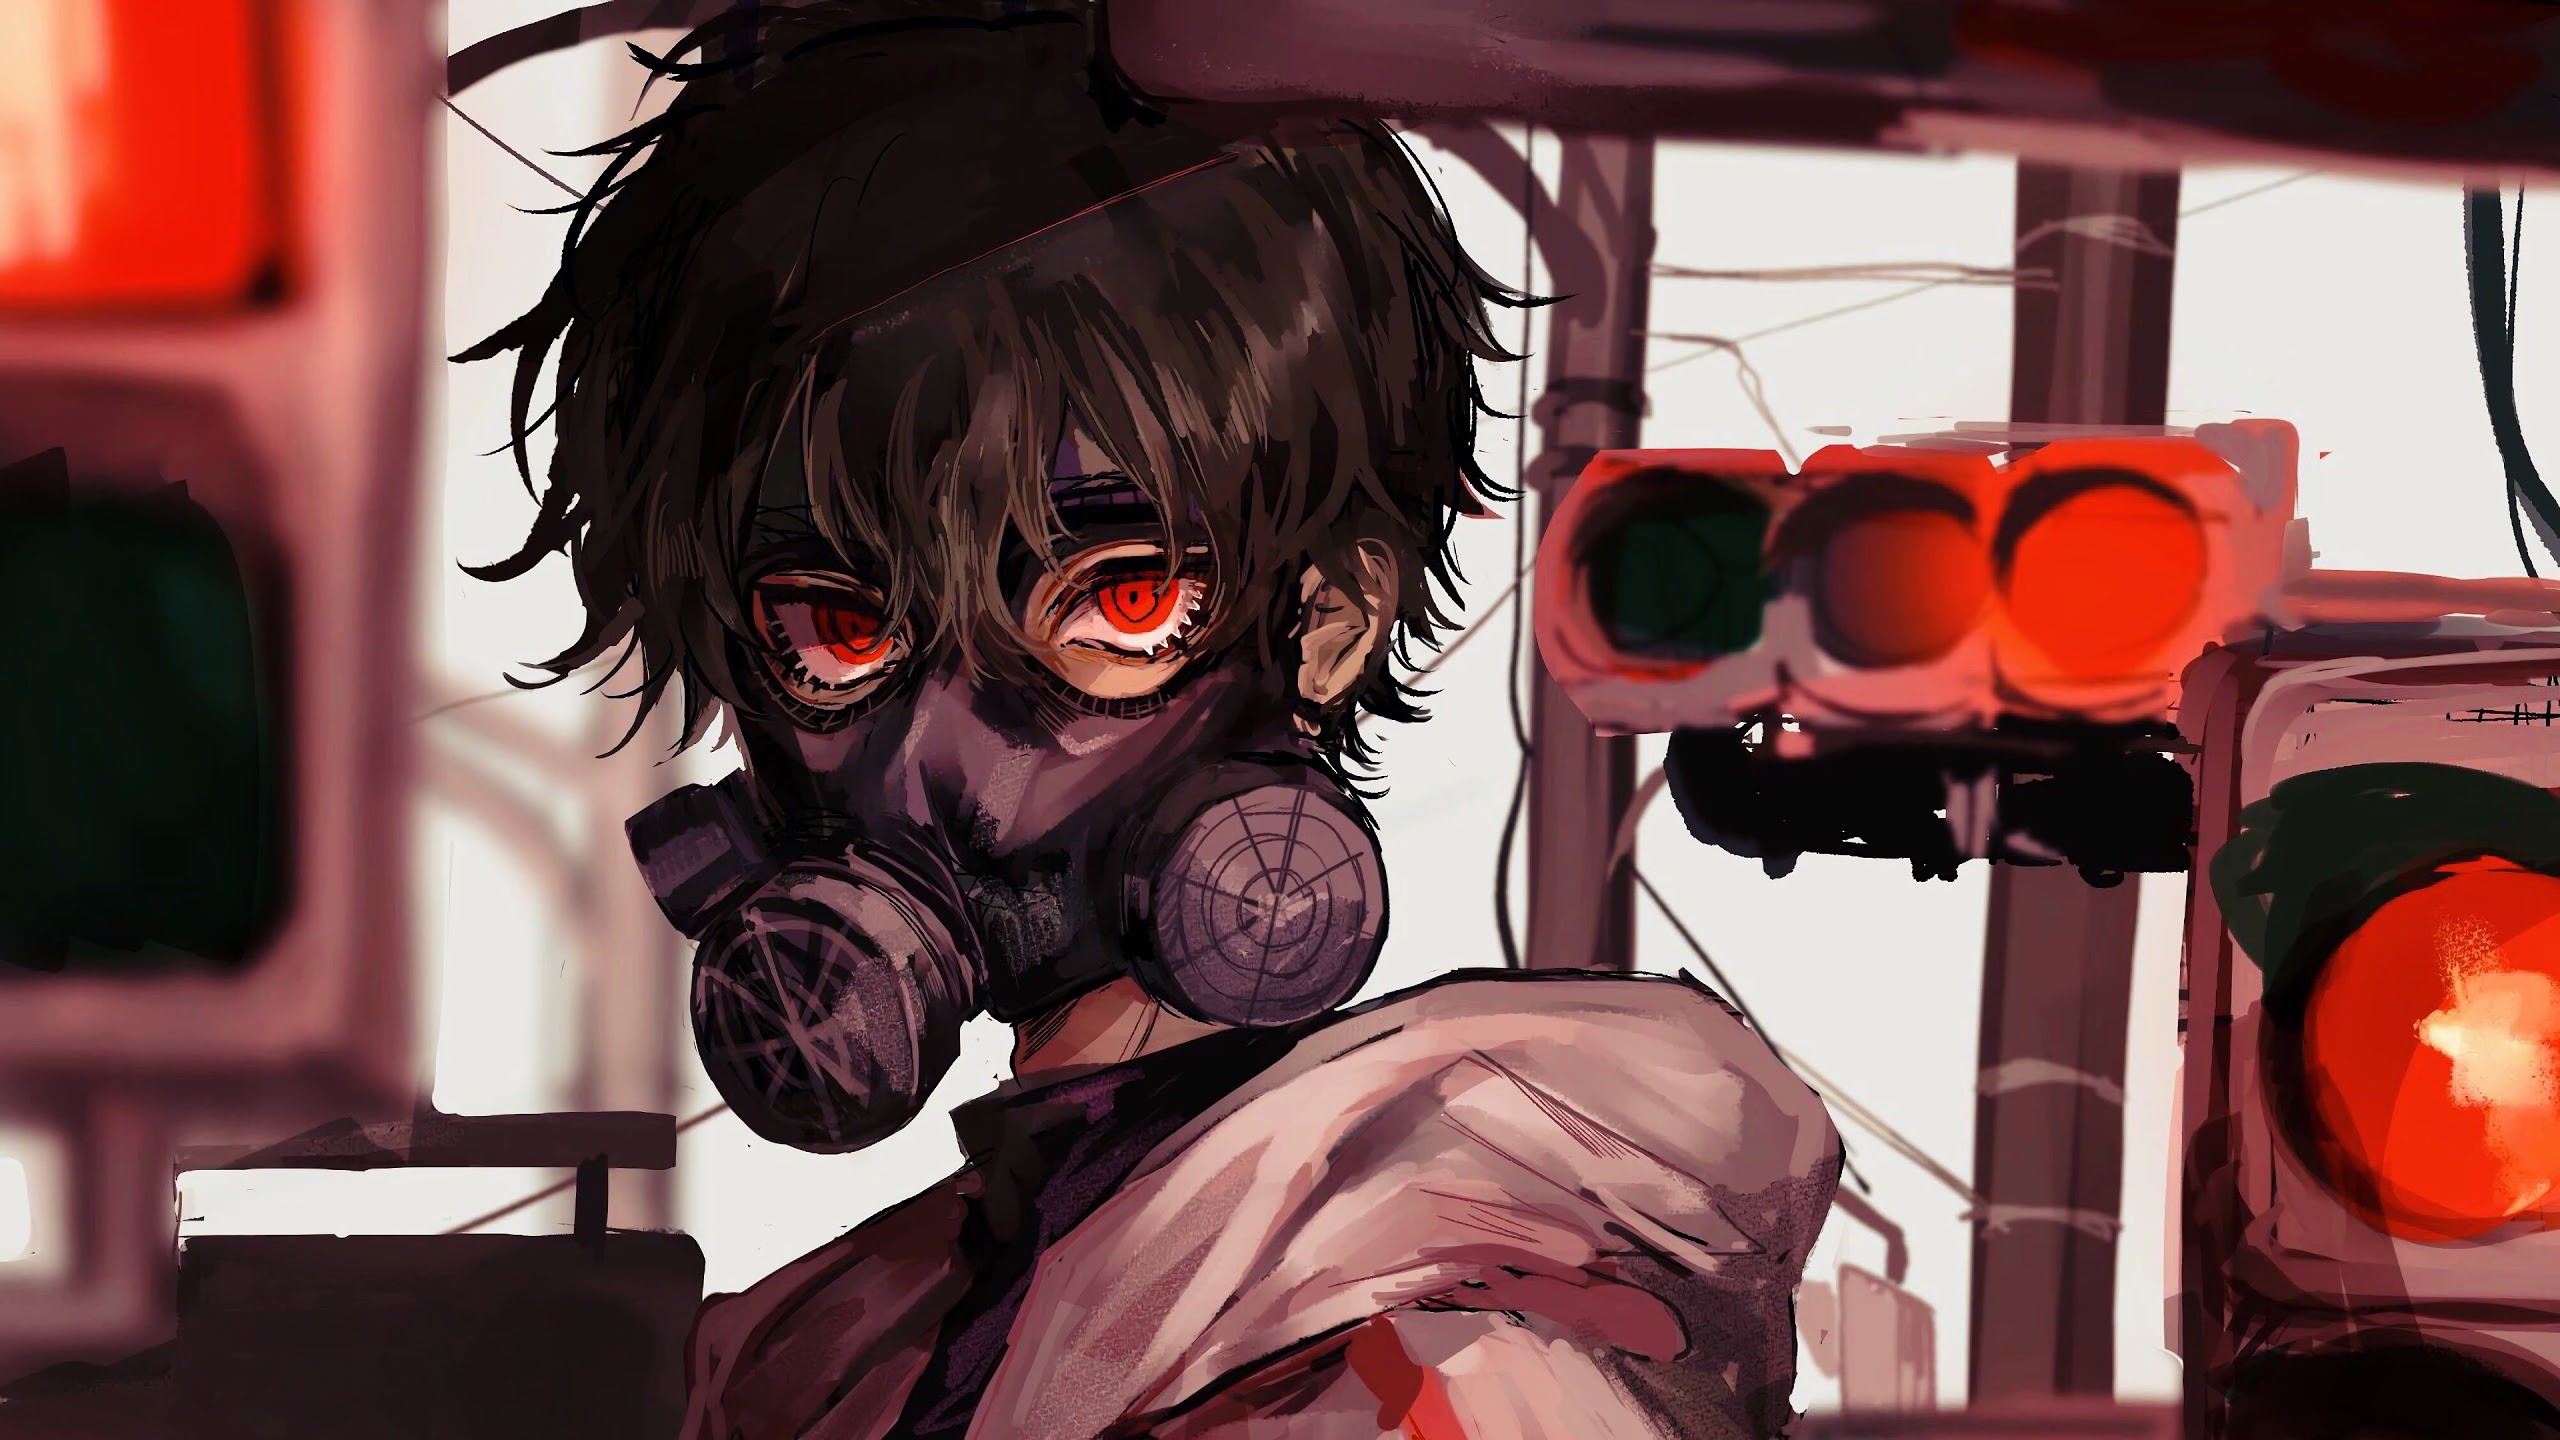 Anime, Gas Mask, Red Eye, 4k, 3840x2160, - Anime Boy Red Eyes - 2560x1440  Wallpaper 